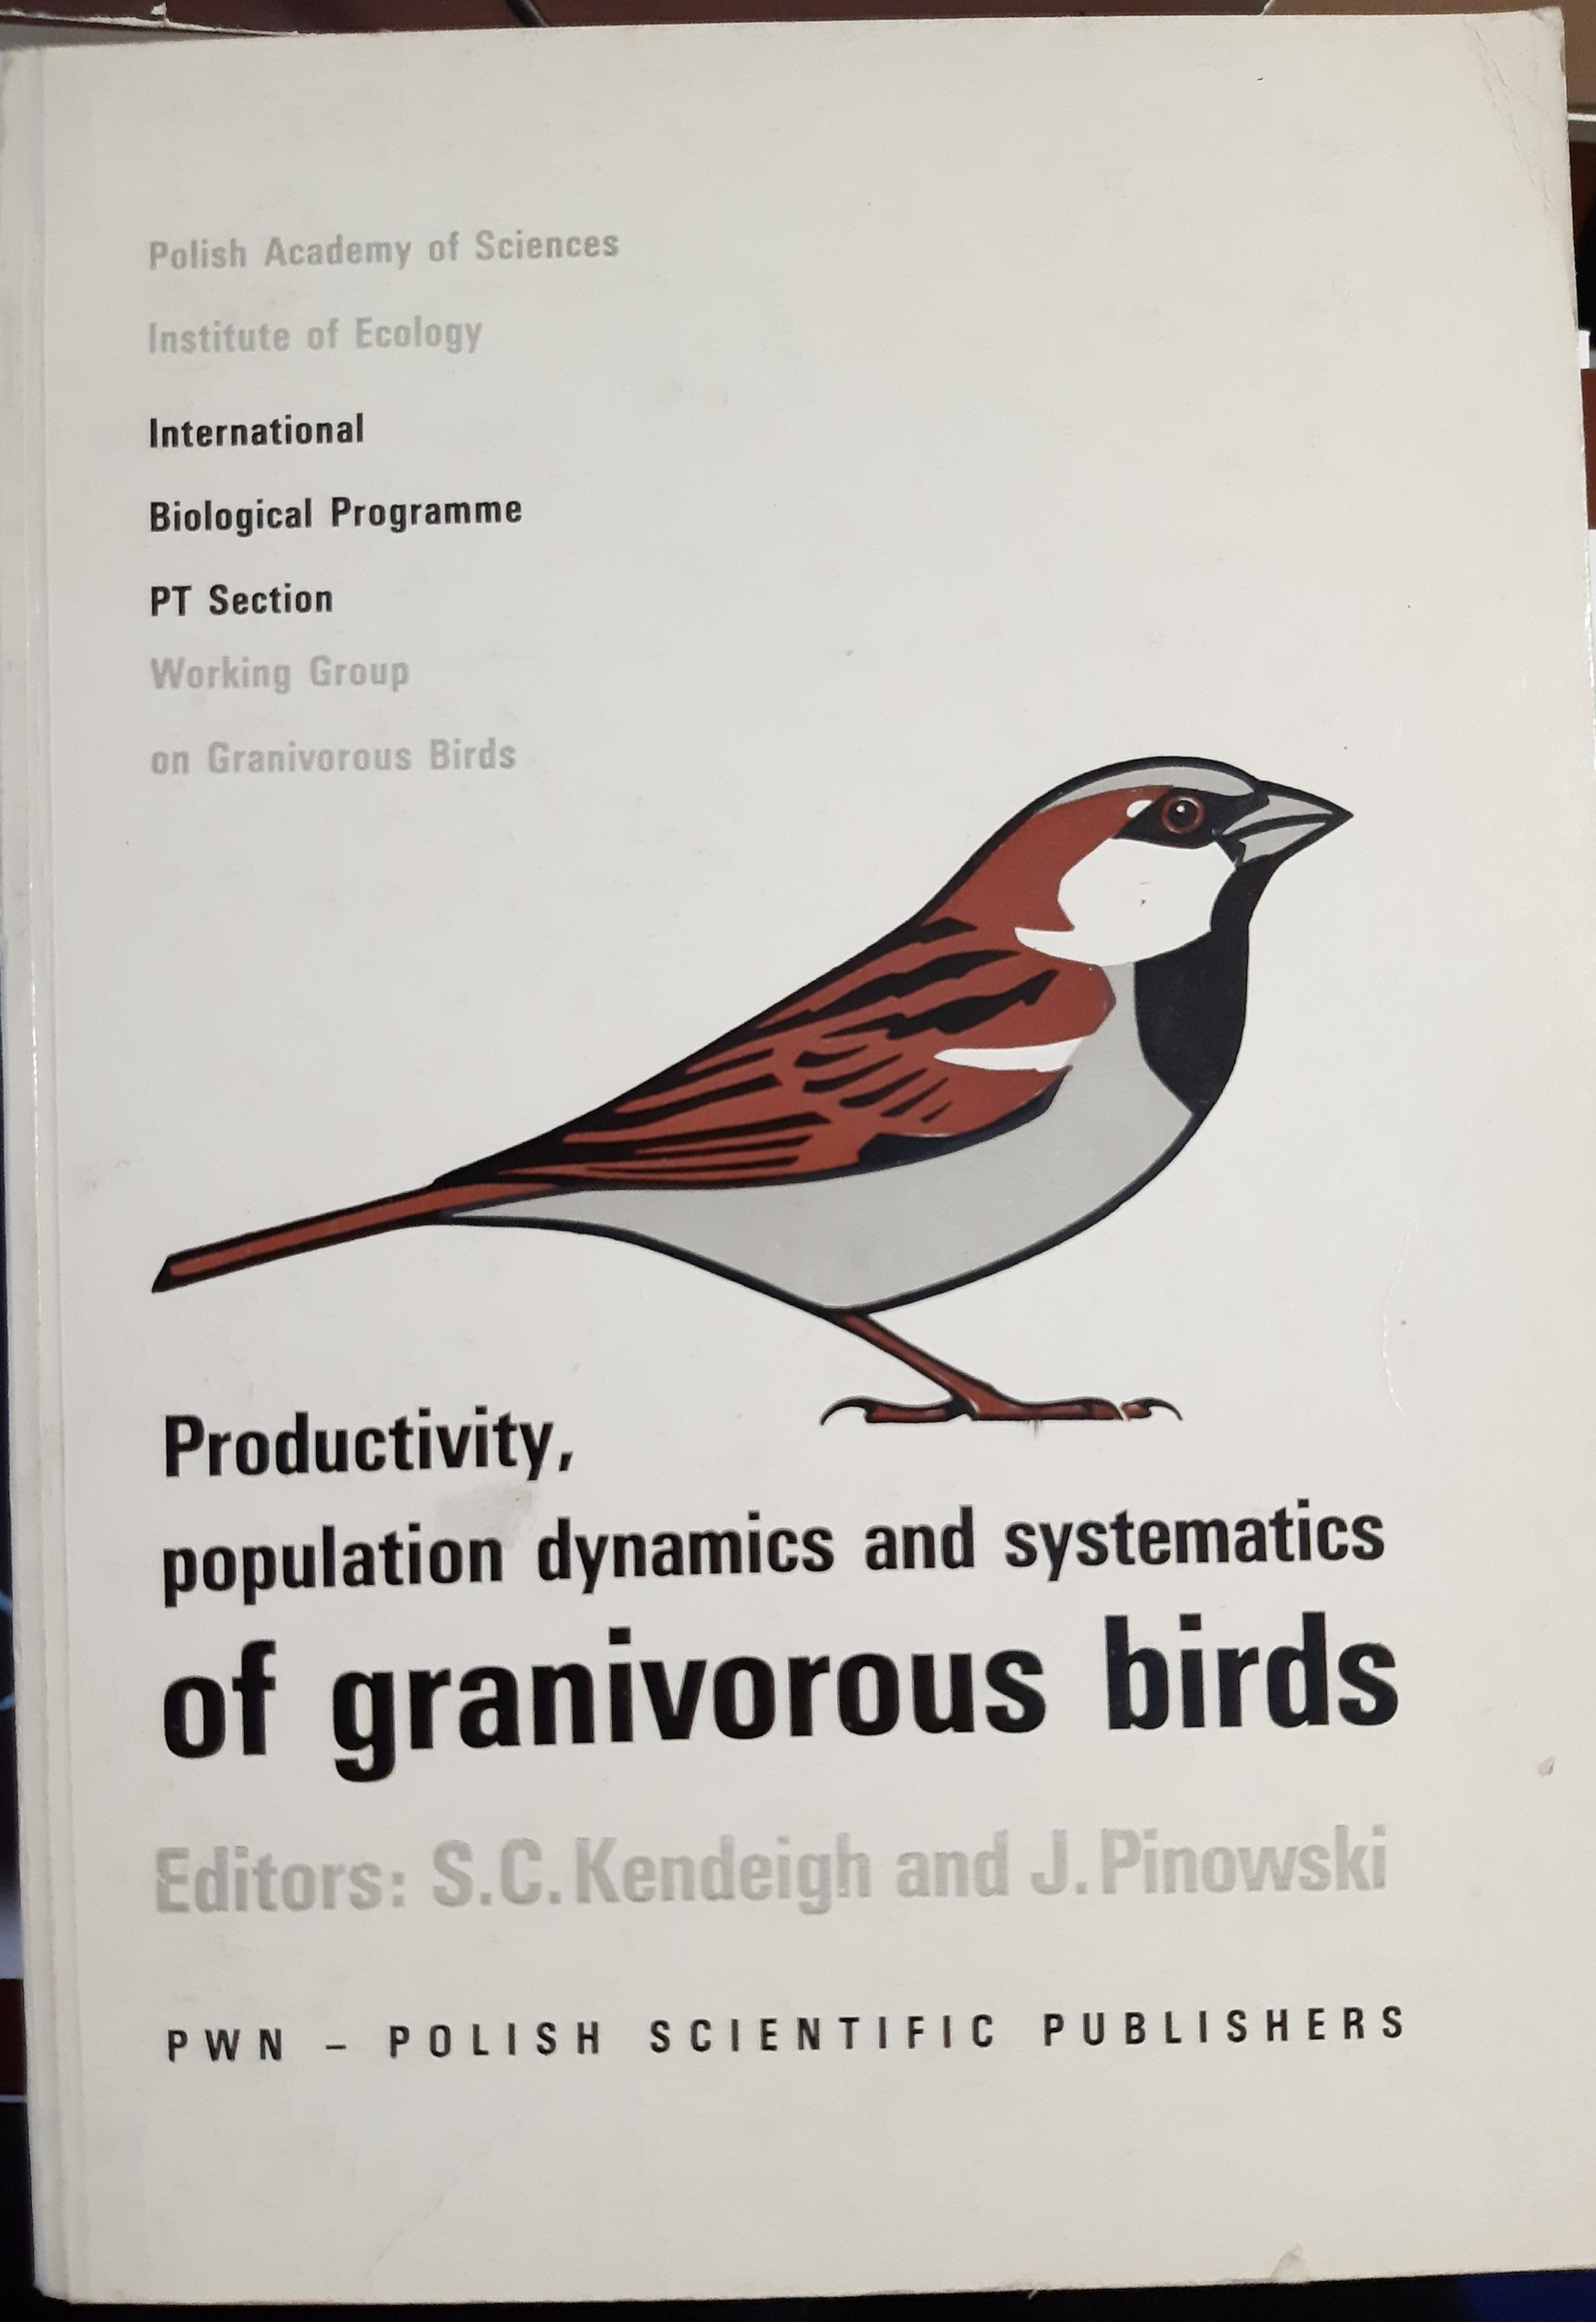 Productivity, population dynamics and systematics of granivorous birds (Rippl-Rónai Múzeum CC BY-NC-ND)